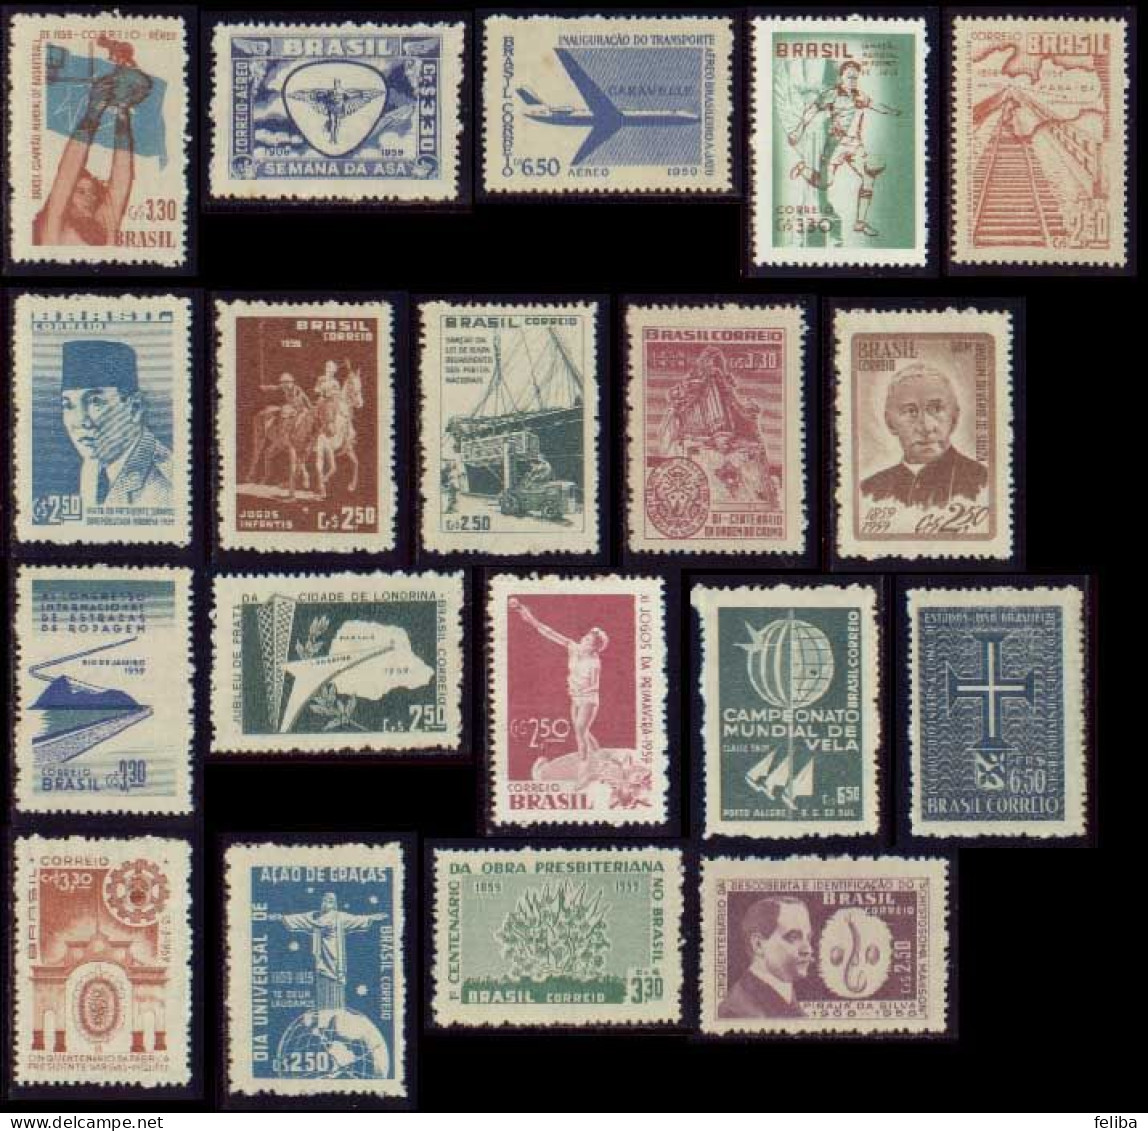 Brazil 1959 Unused Commemorative Stamps - Full Years